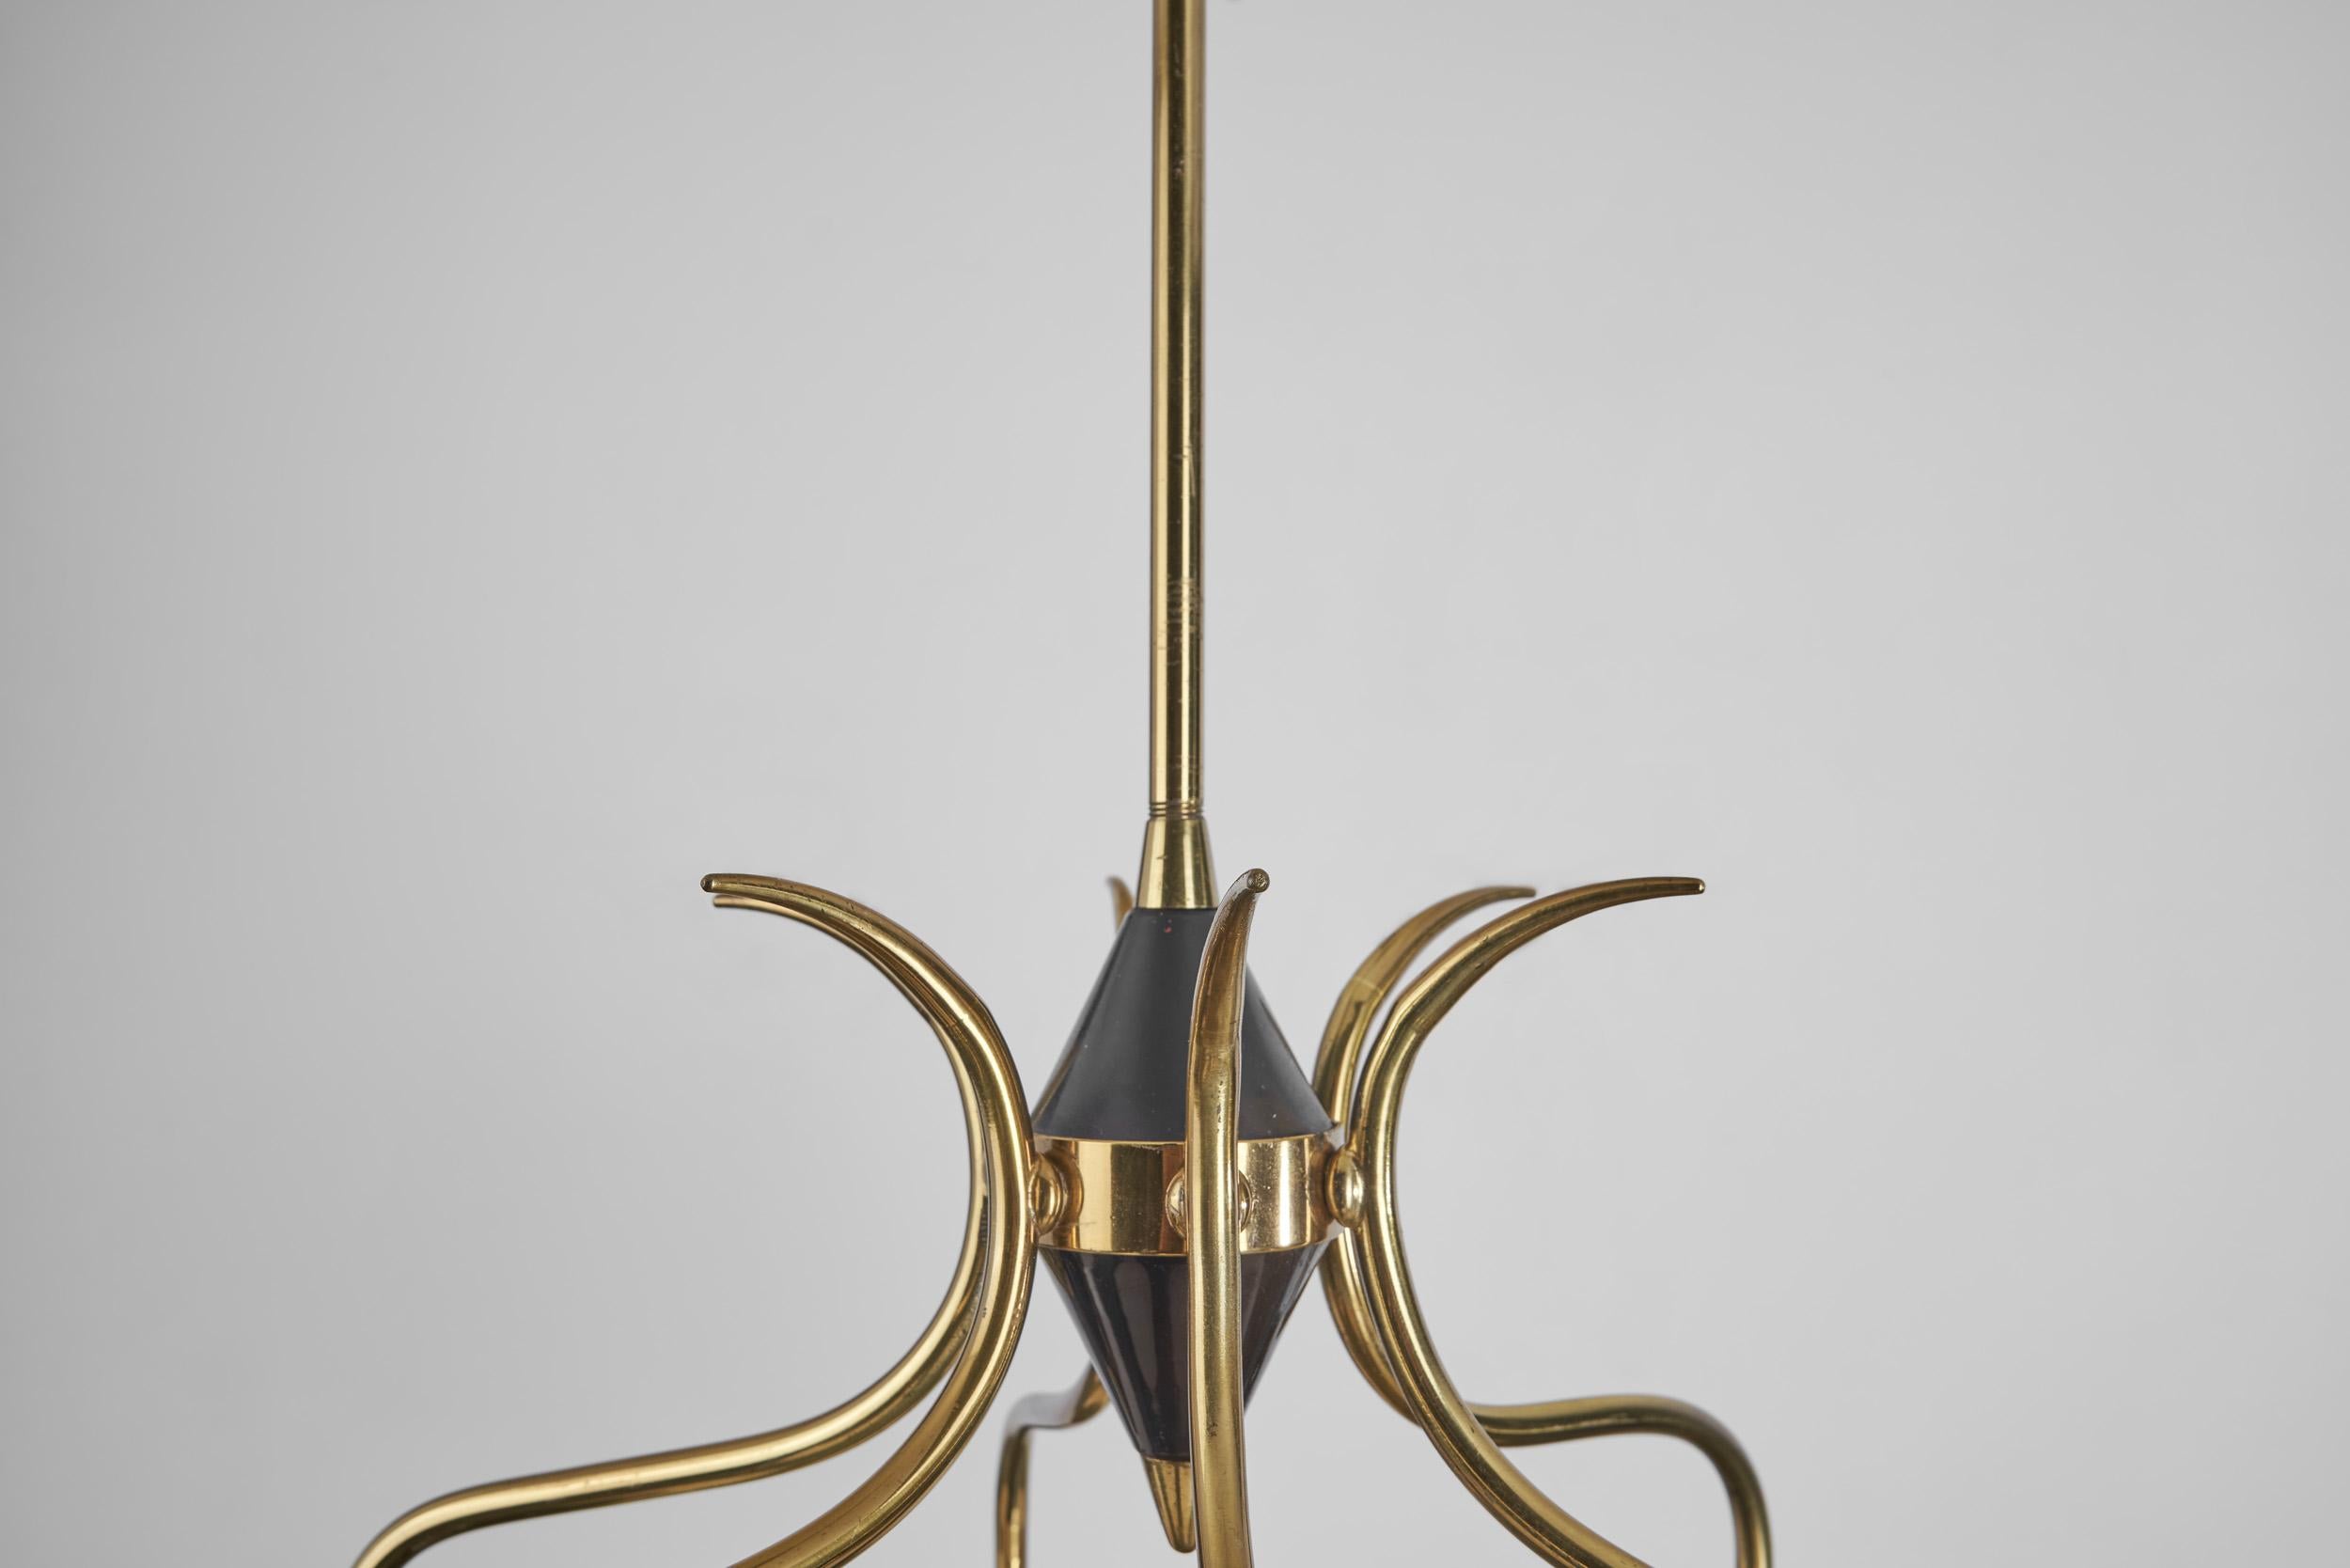 Sculptural Brass and Glass Ceiling Light, Scandinavia, 1950s For Sale 6